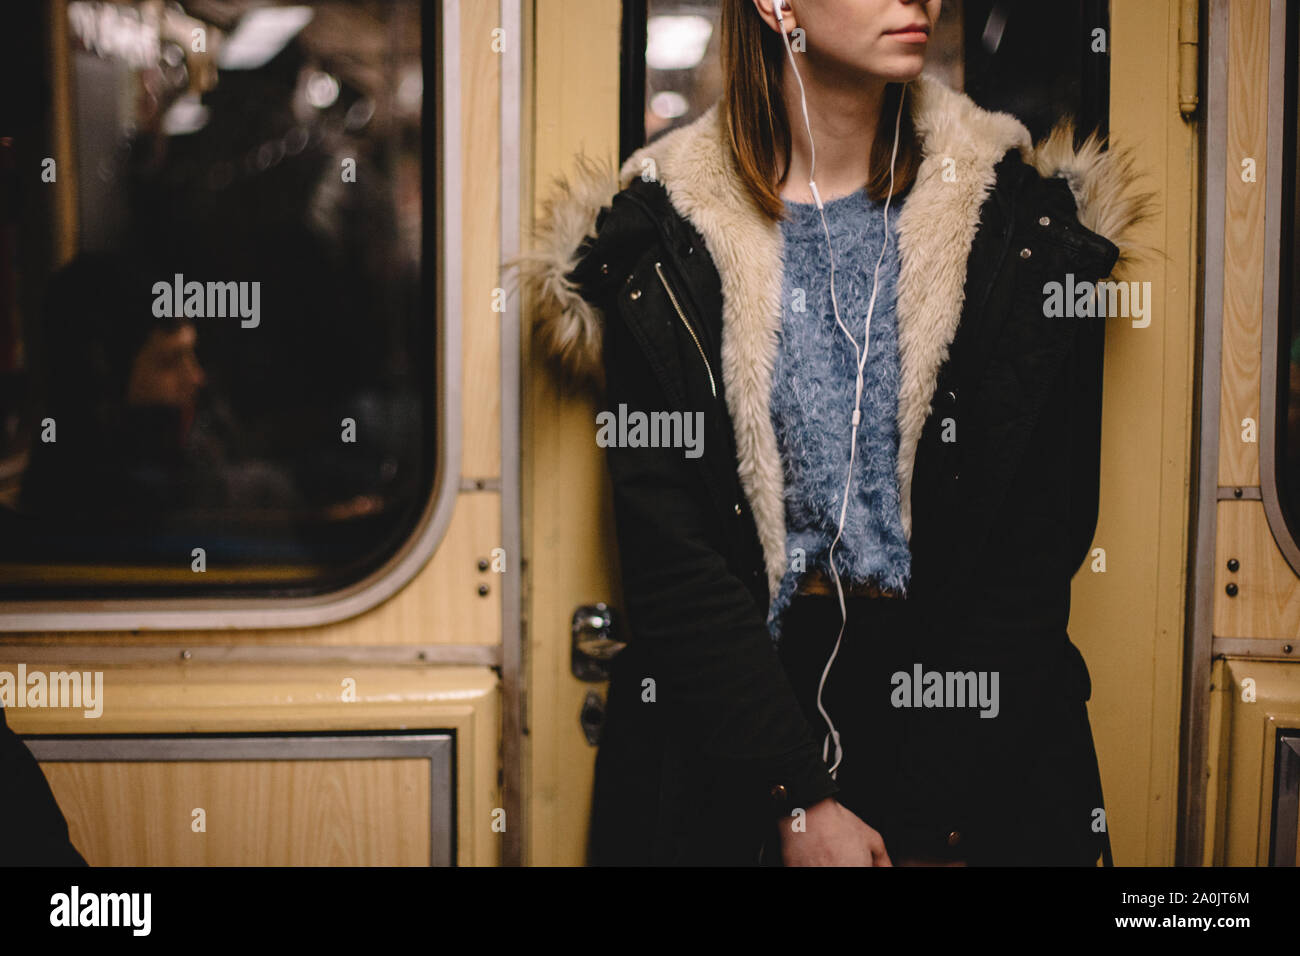 Frau Musik hören über Kopfhörer unterwegs in der U-Bahn Stockfoto